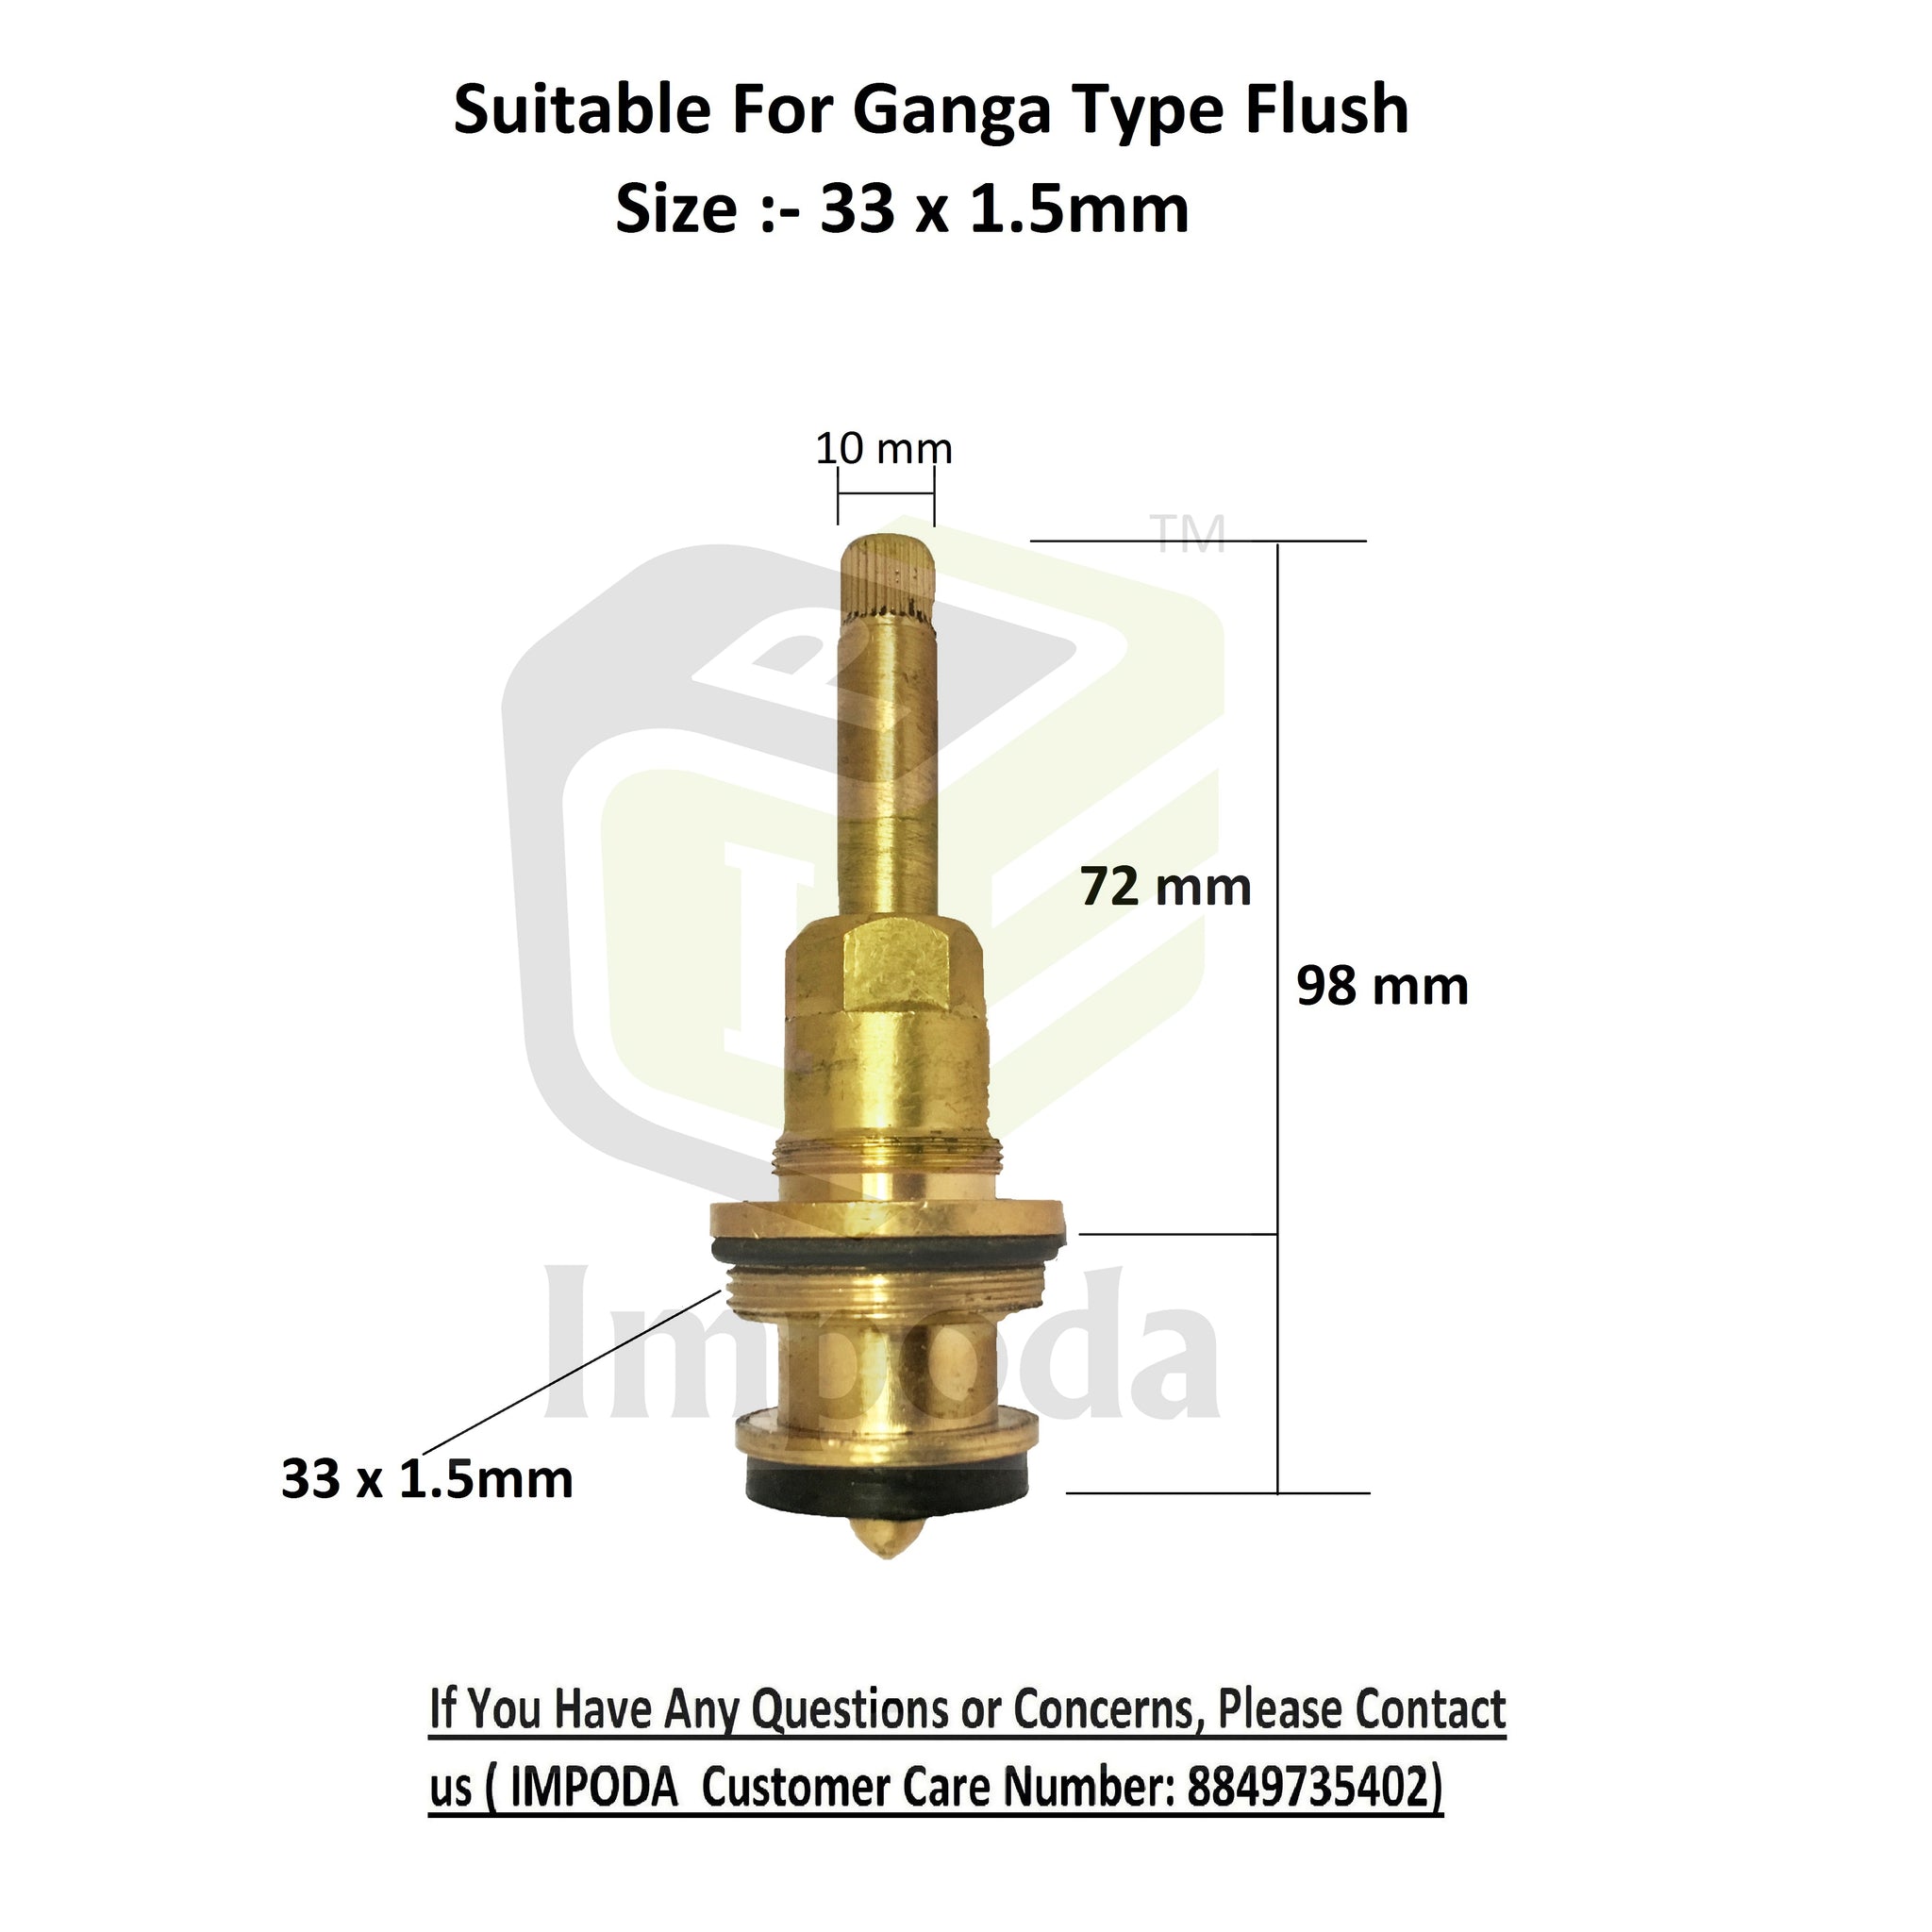 Ganga Type Flush Size 33 X 1.5"